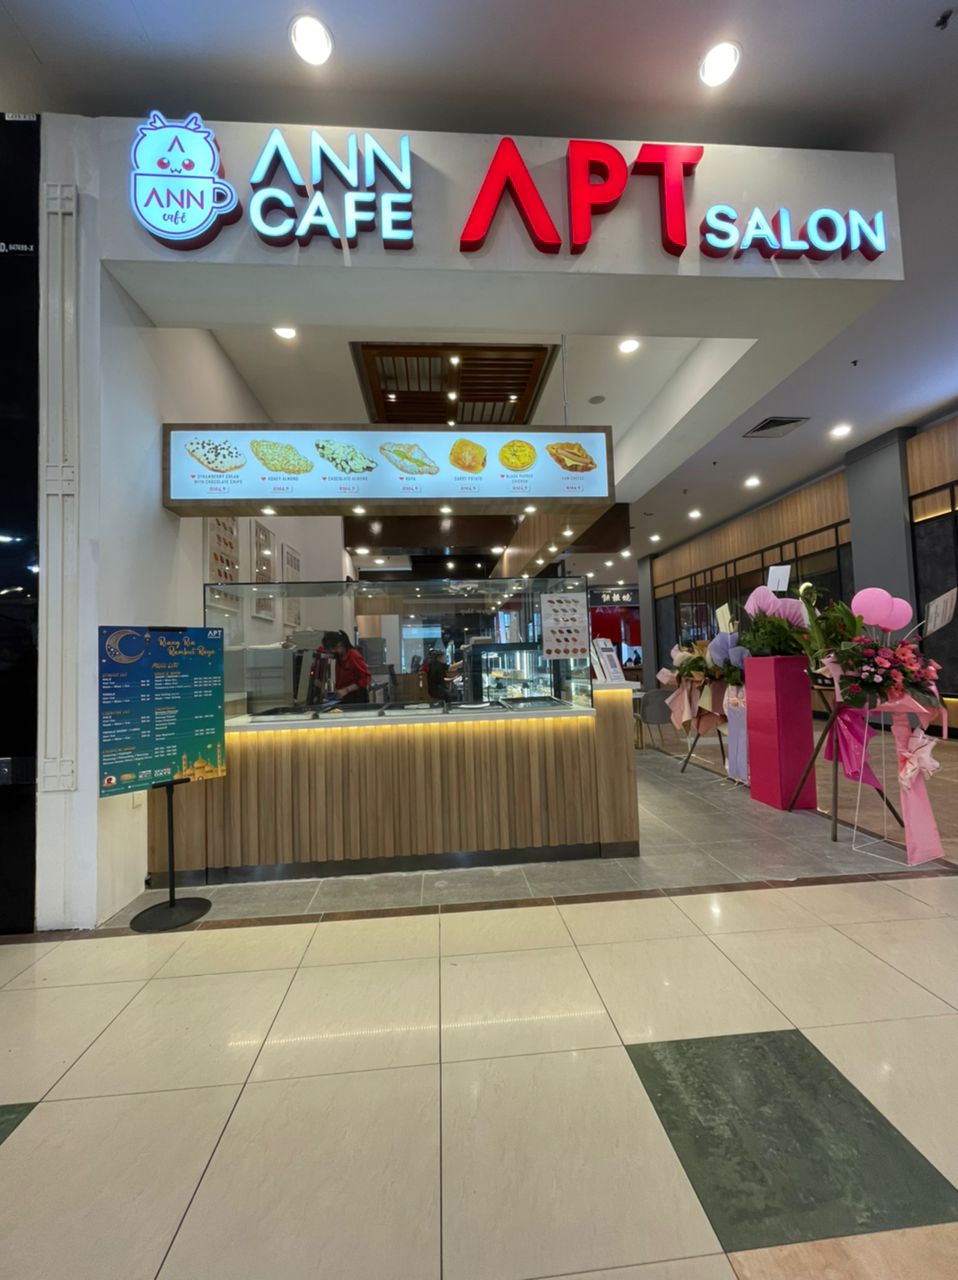 APT HAIR SALON & ANN CAFE